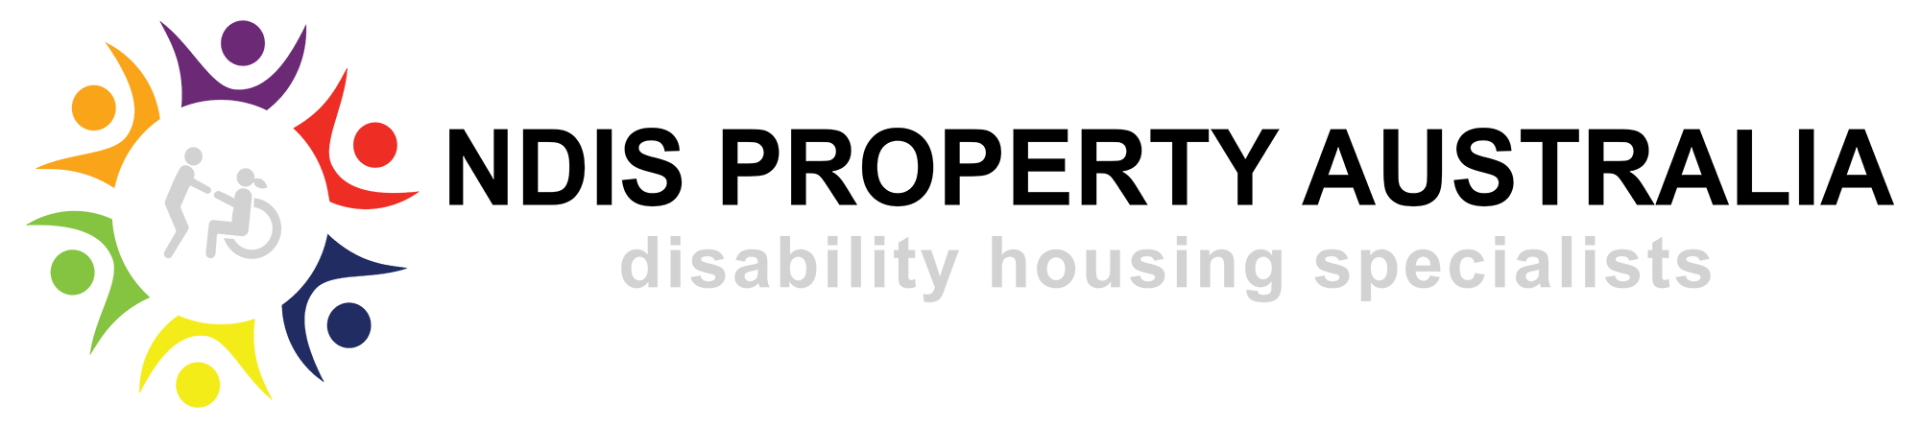 NDIS Property Australia logo